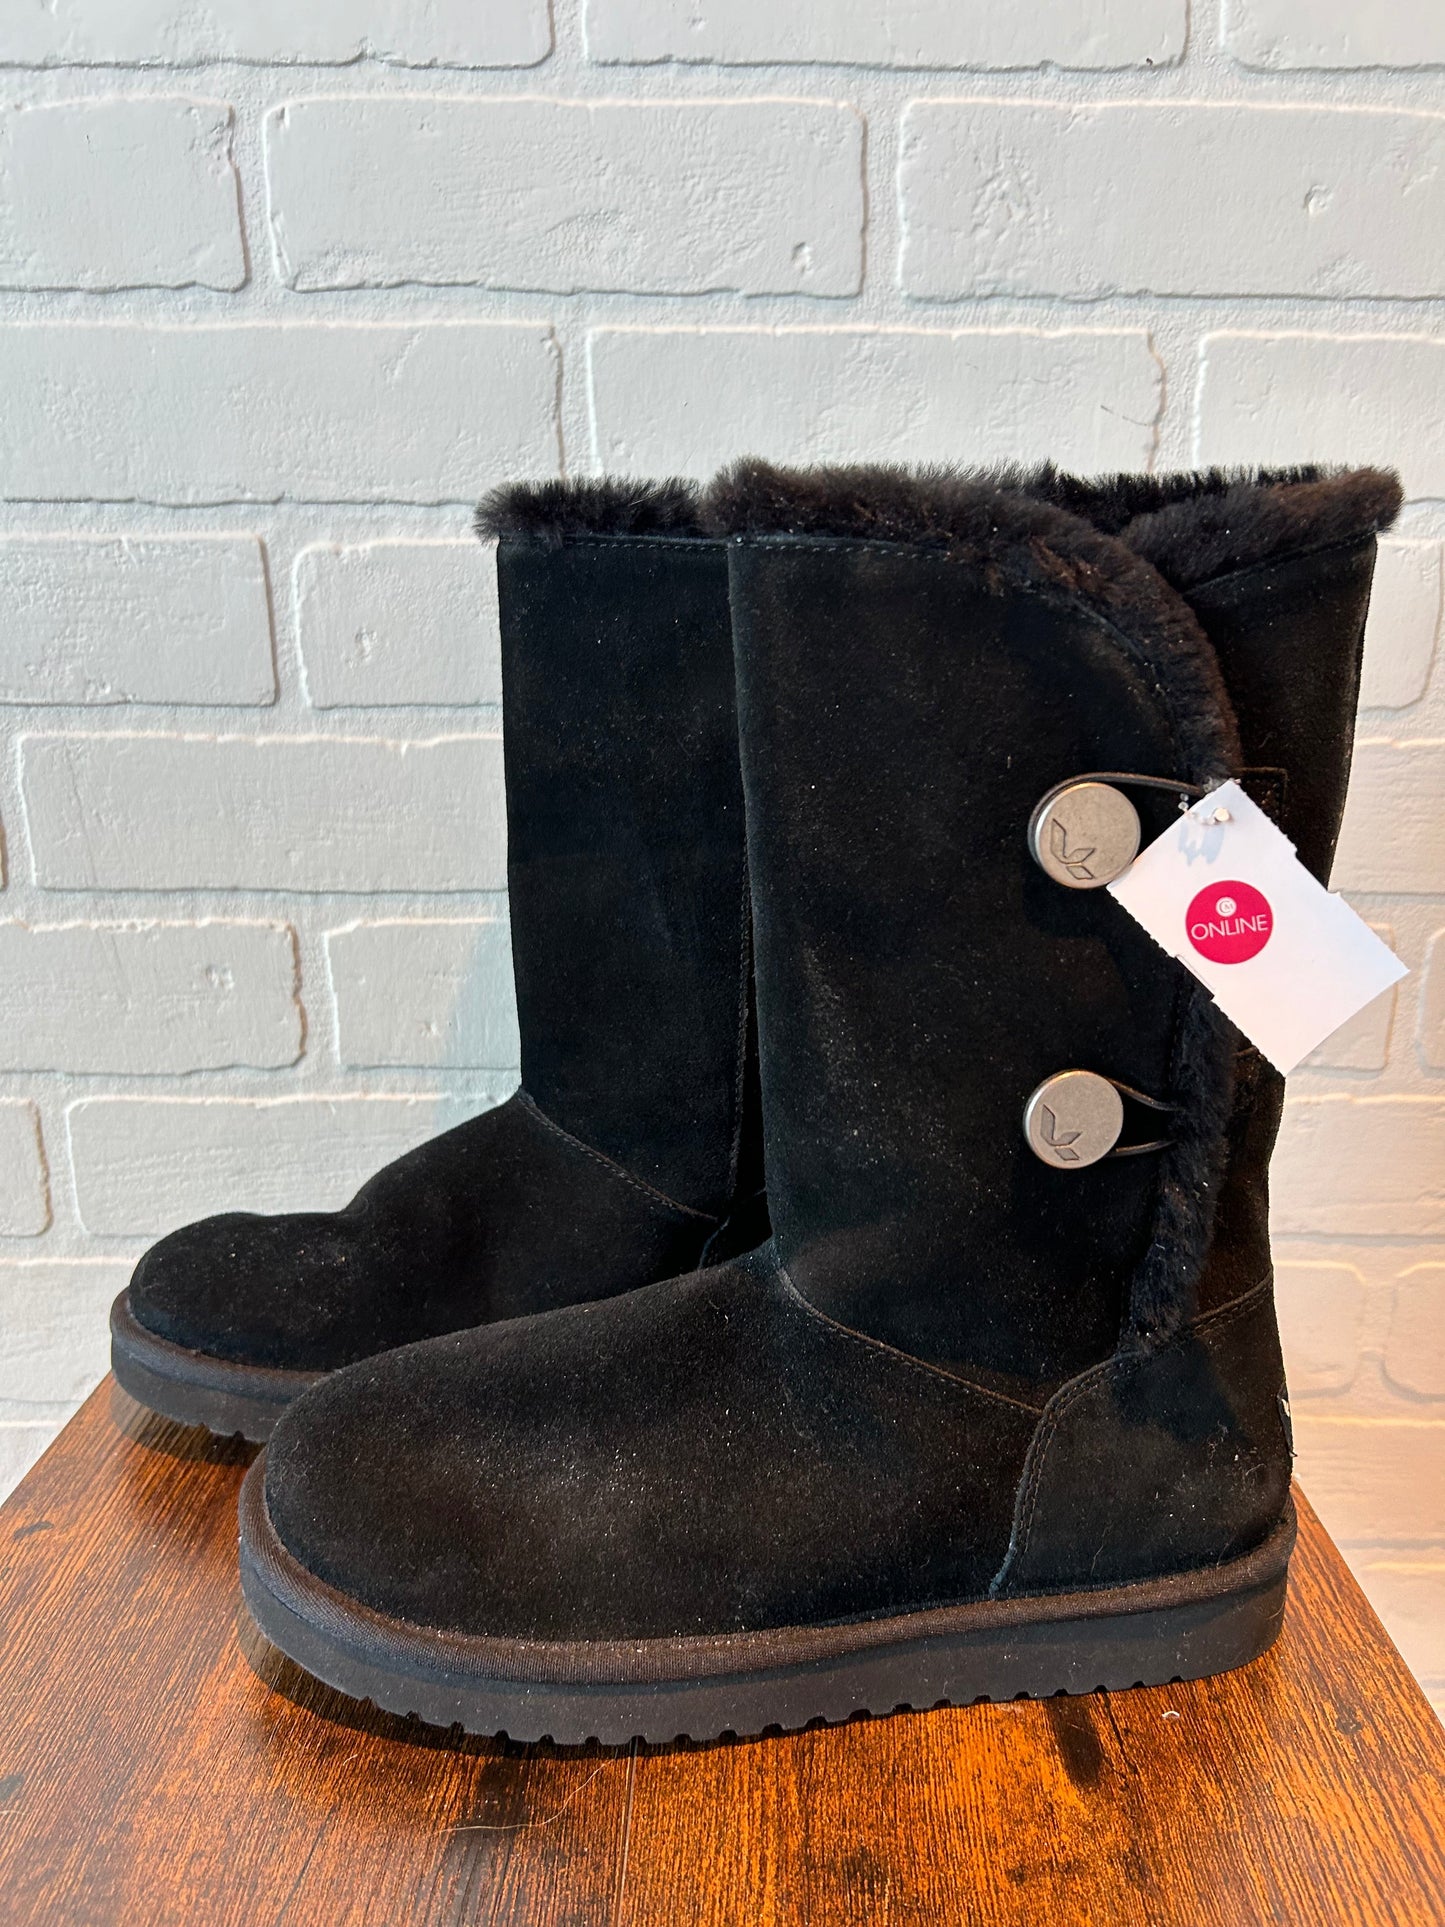 Black Boots Mid-calf Flats Koolaburra By Ugg, Size 9